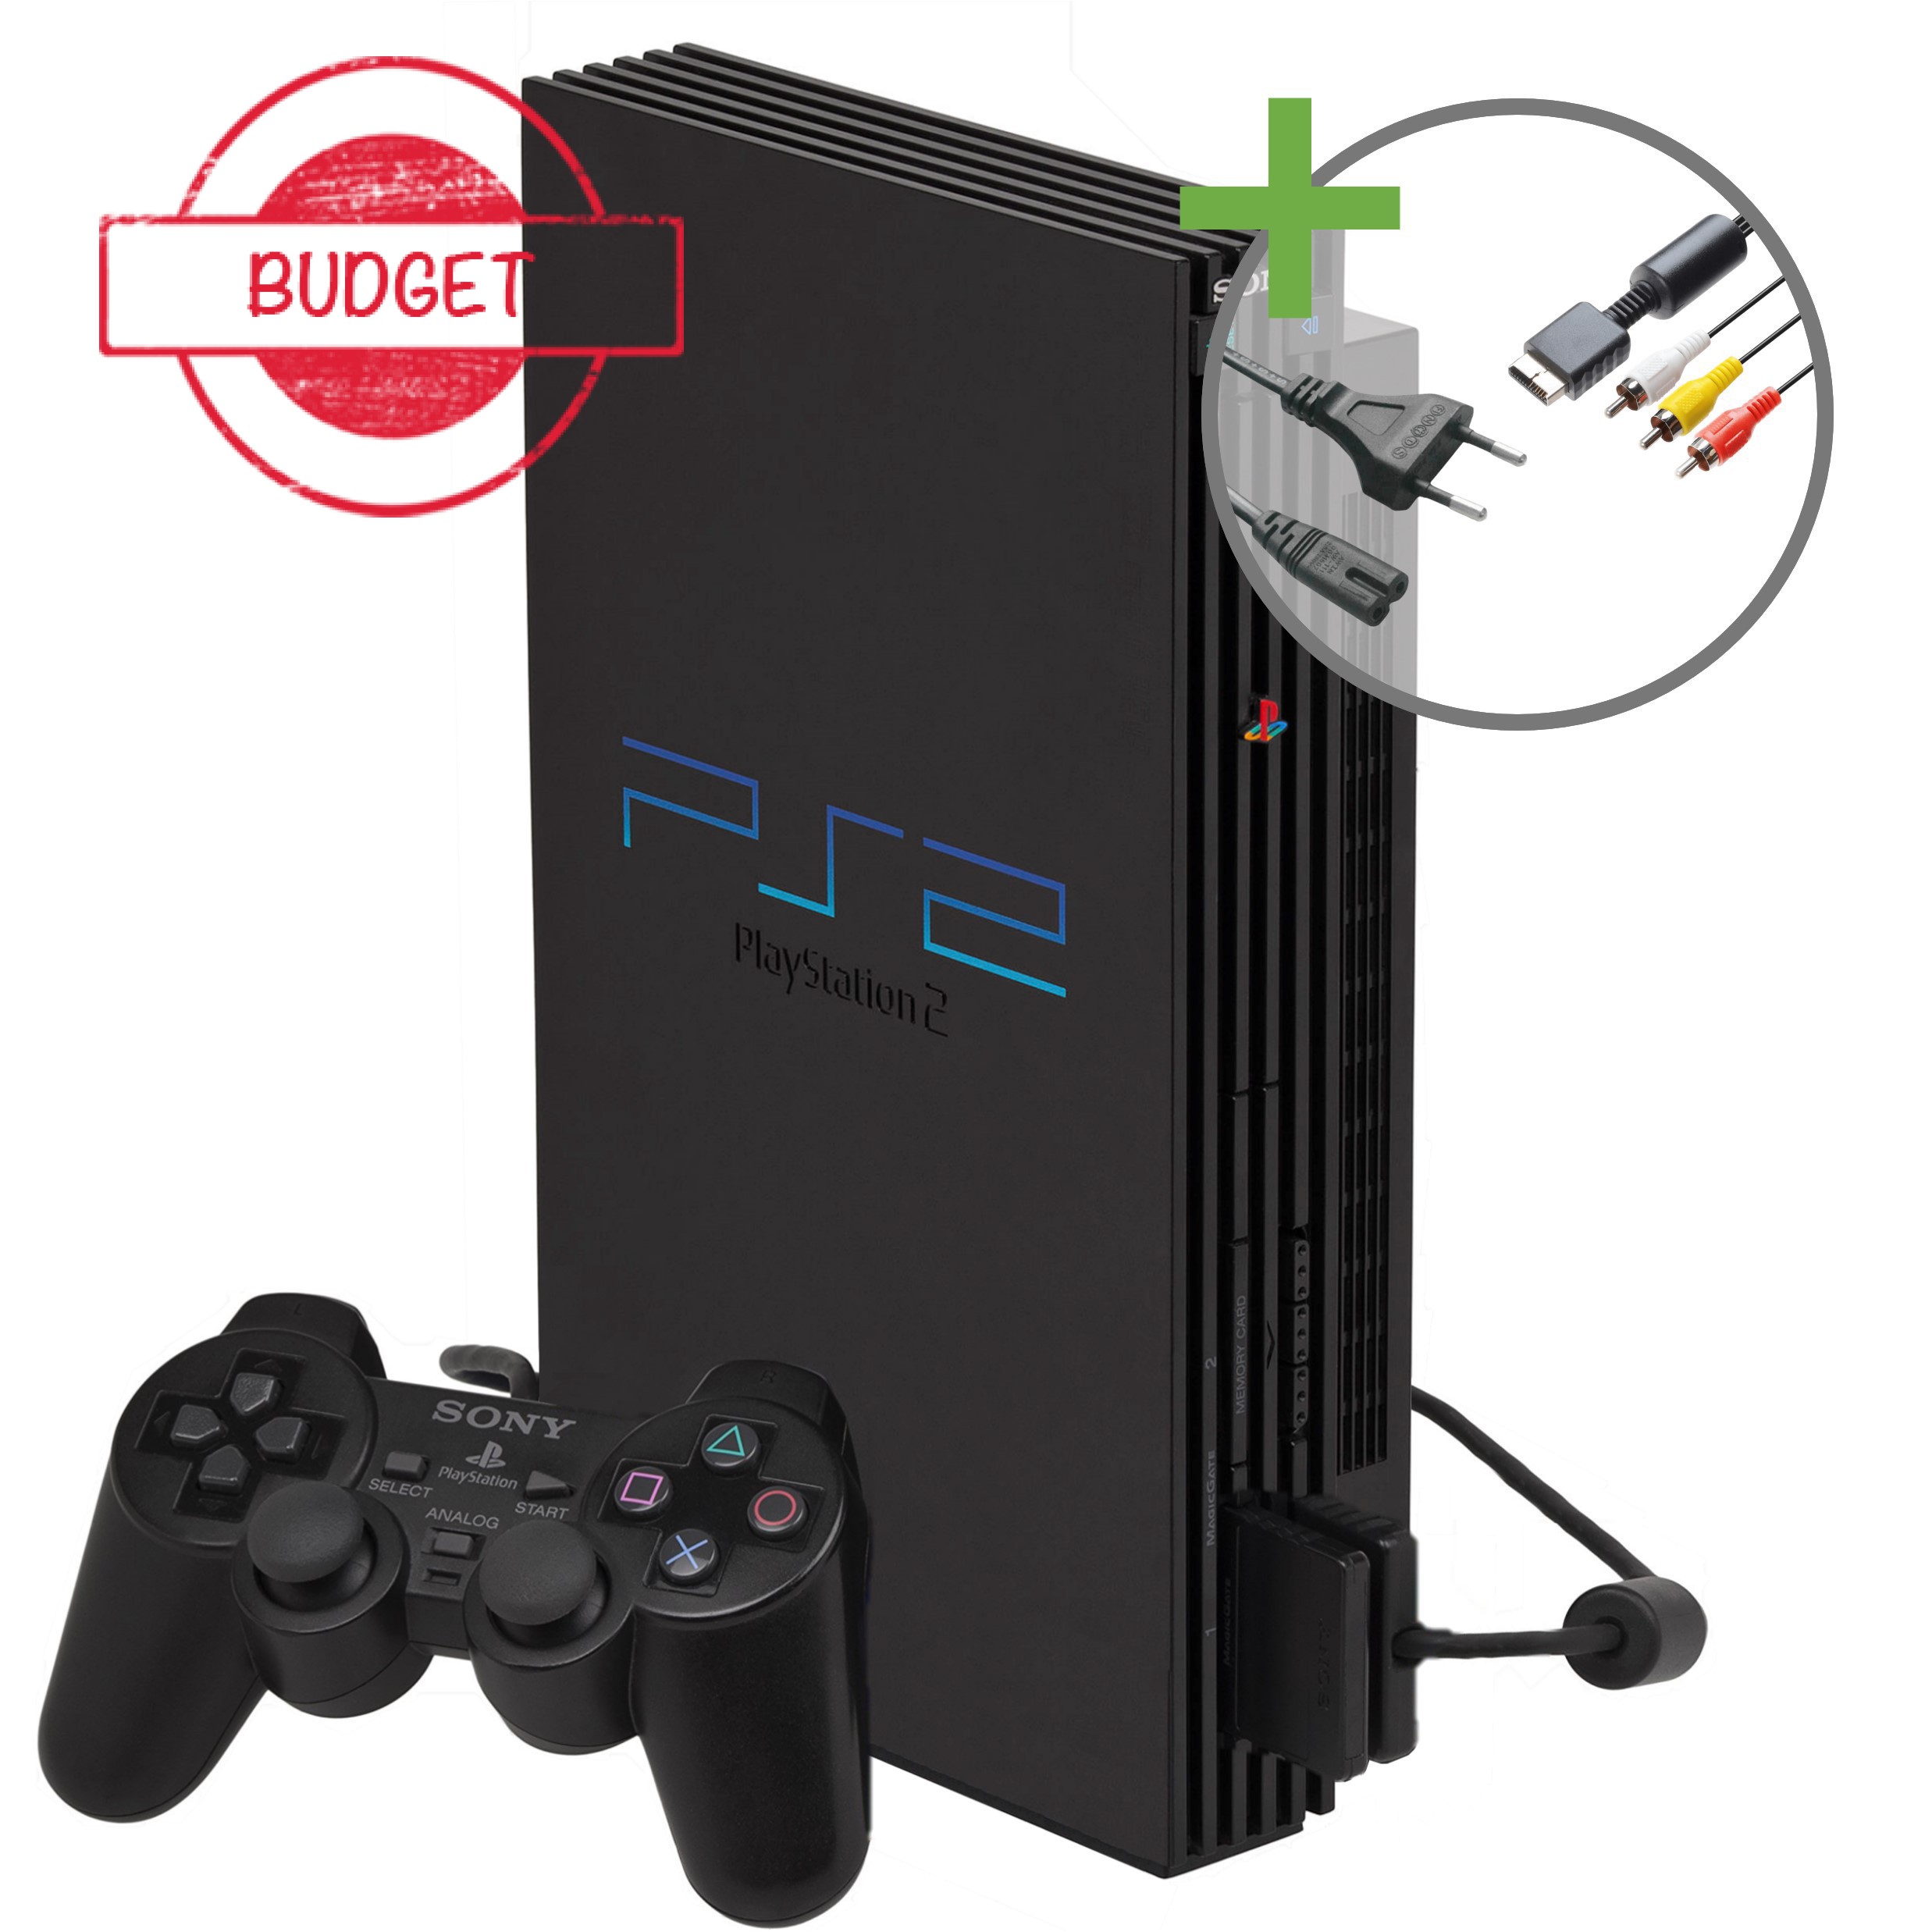 Sony PlayStation 2 Phat Starter Pack - Black Edition - Budget Kopen | Playstation 2 Hardware